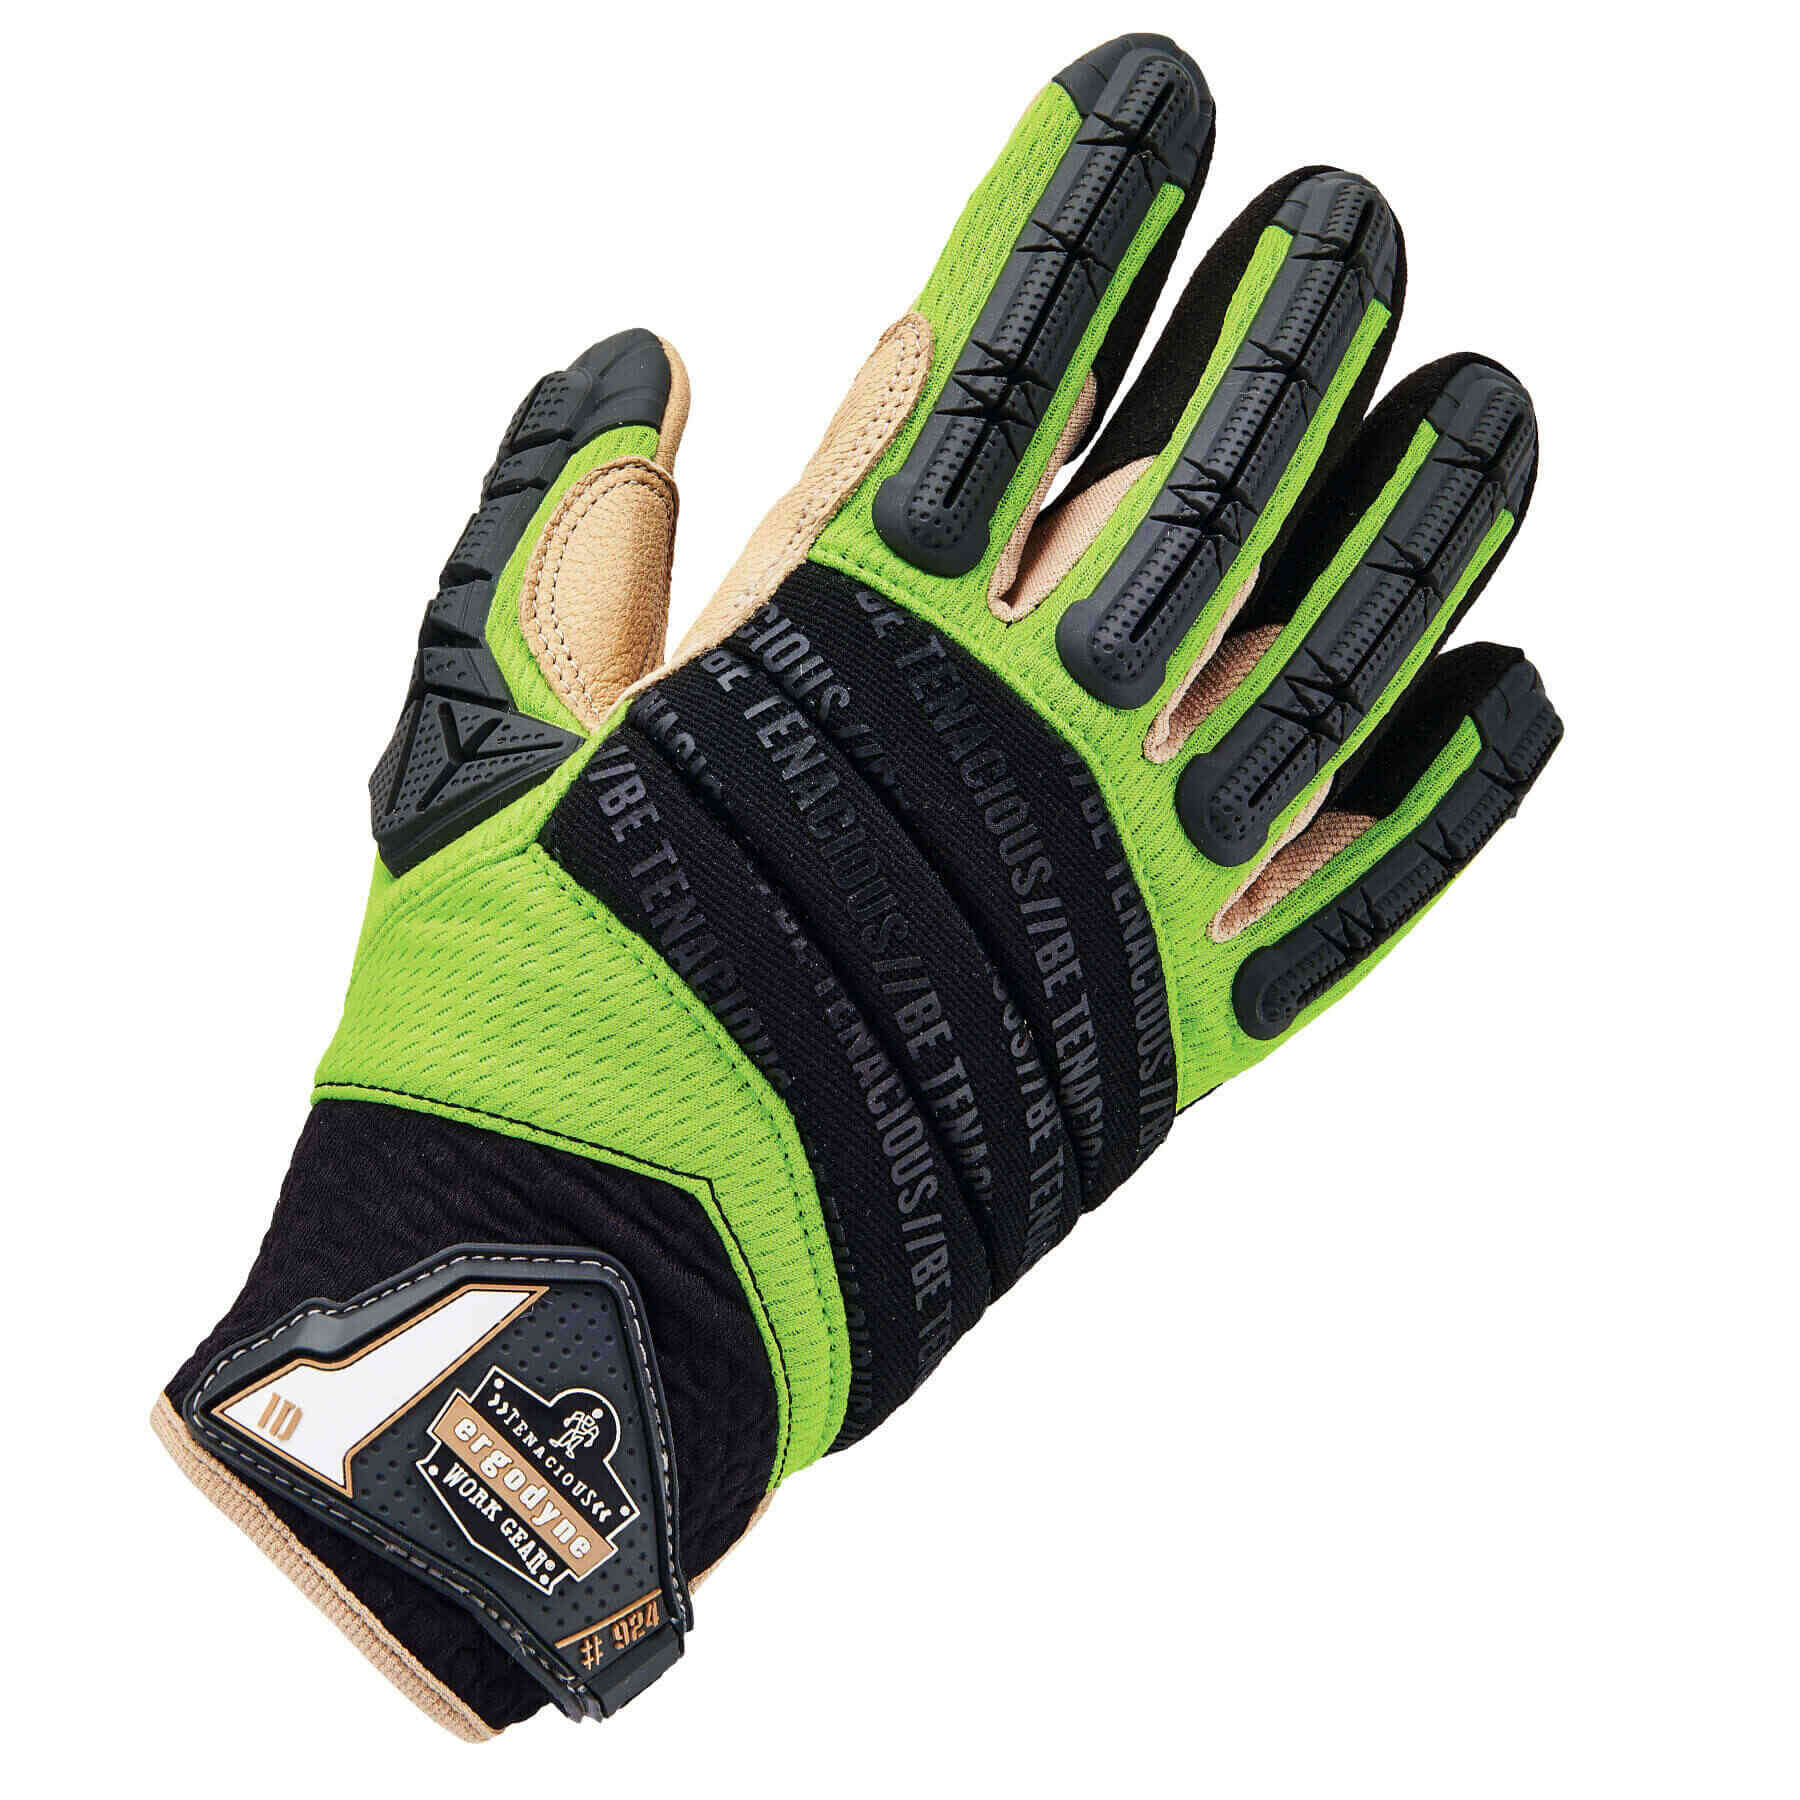 Leather-Reinforced Hybrid DIR Gloves - Leather